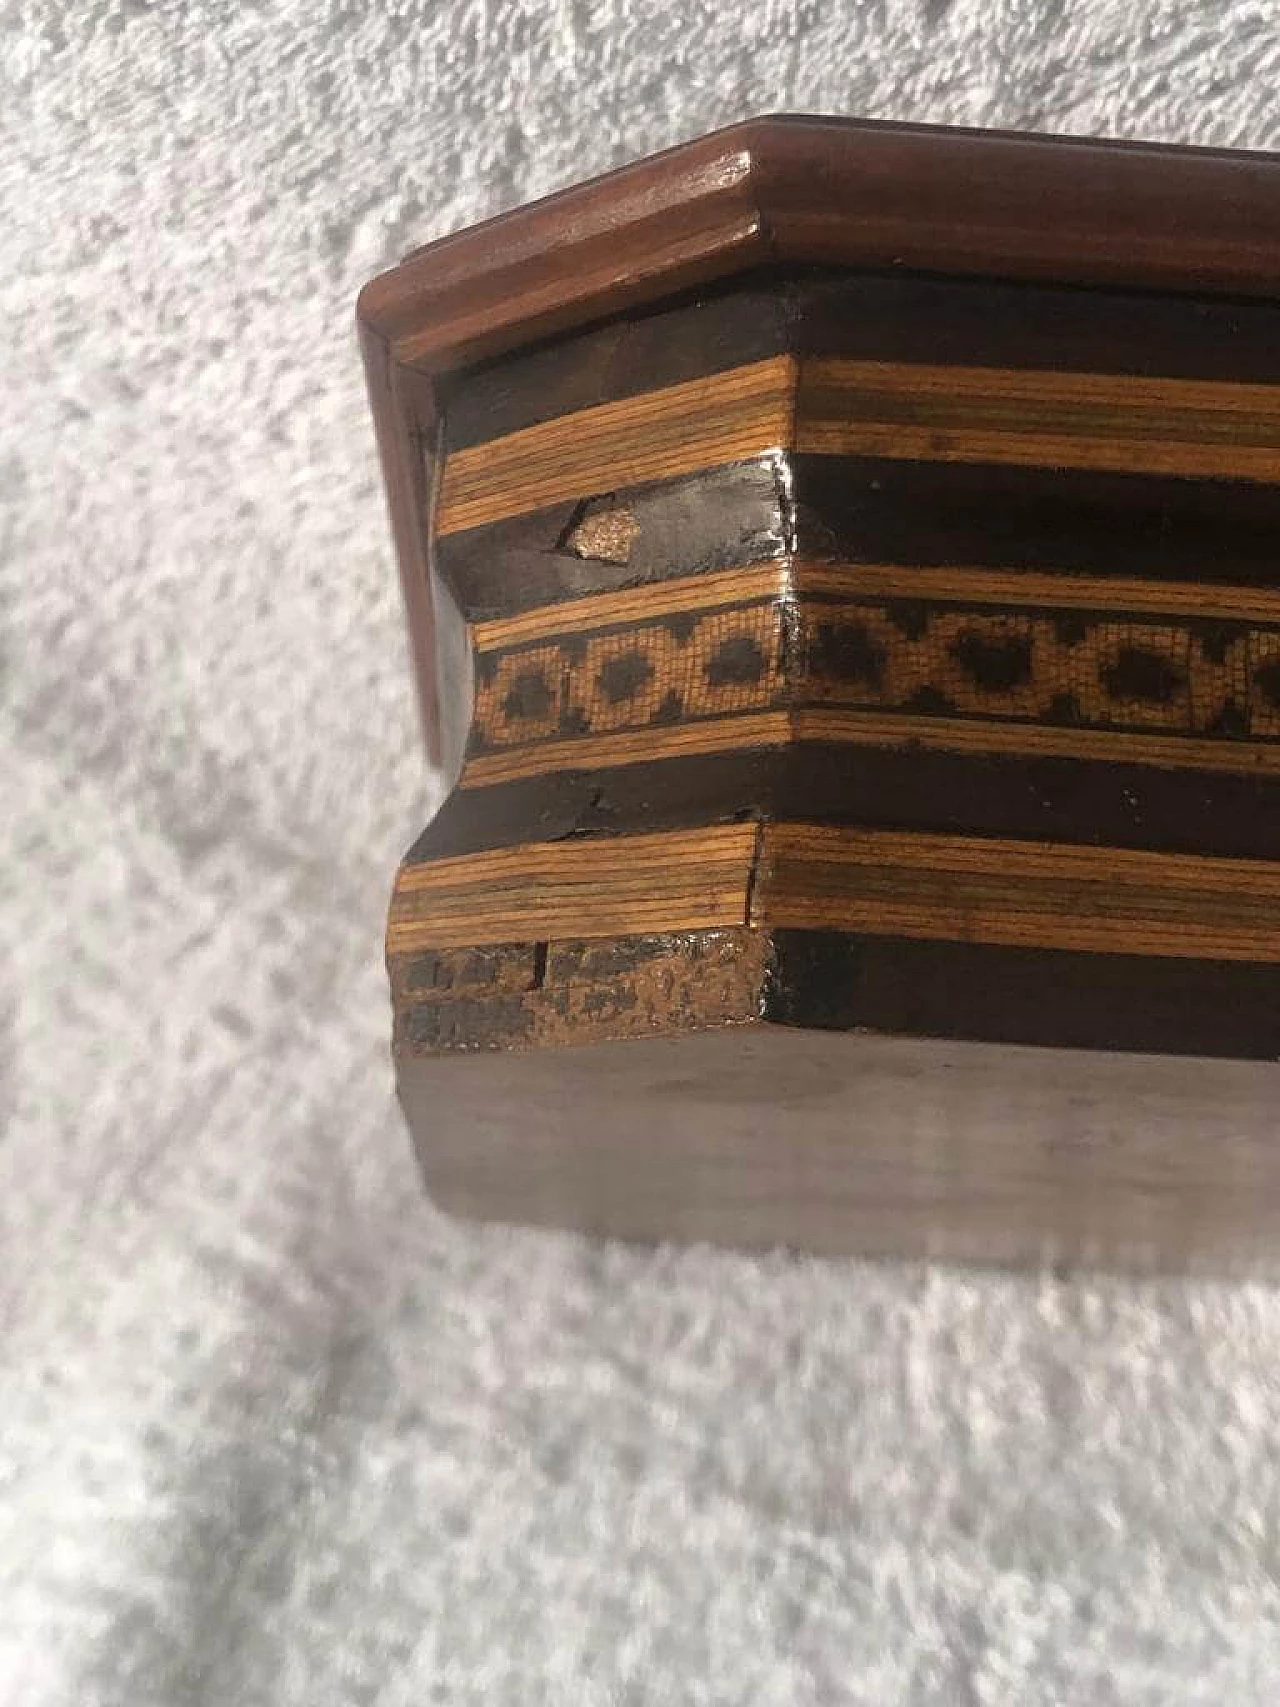 Sorrentine jewelry box in inlaid wood, 19th century 1400589